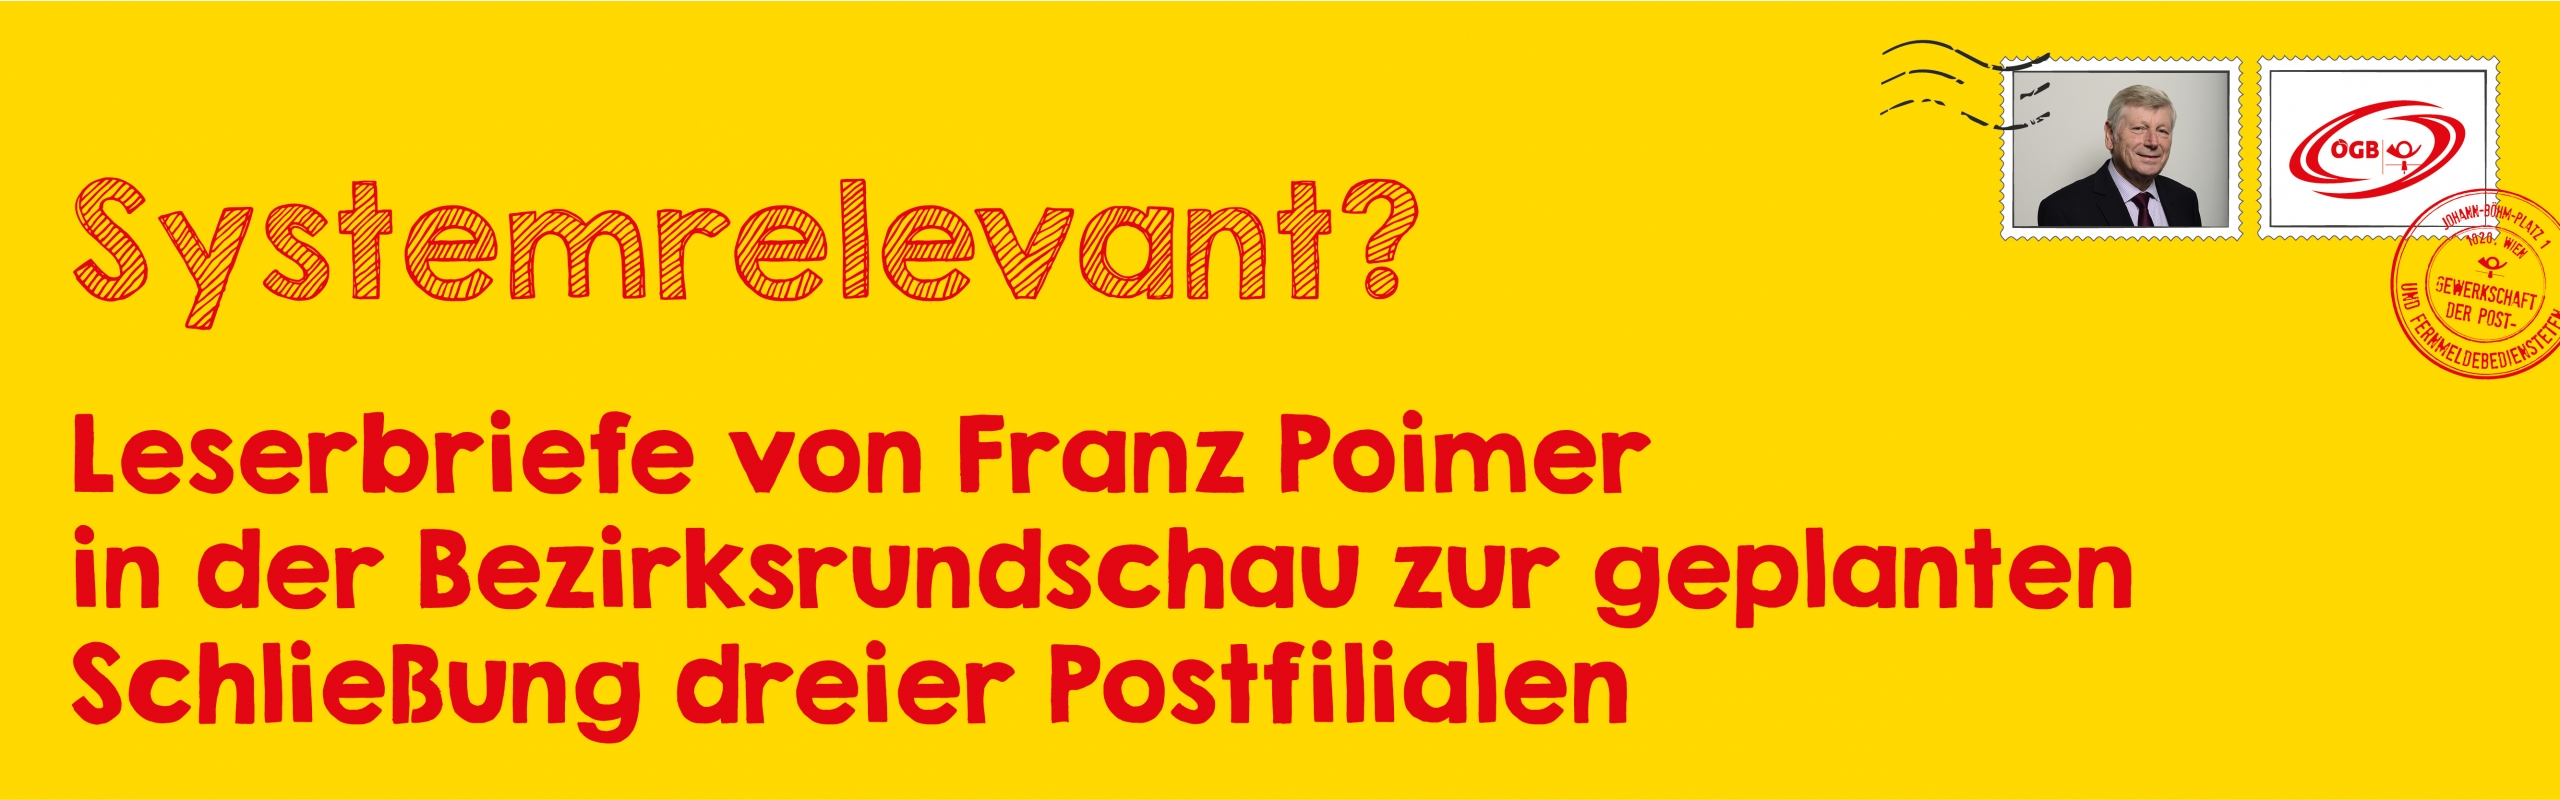 Leserbriefe Franz Poimer_Banner